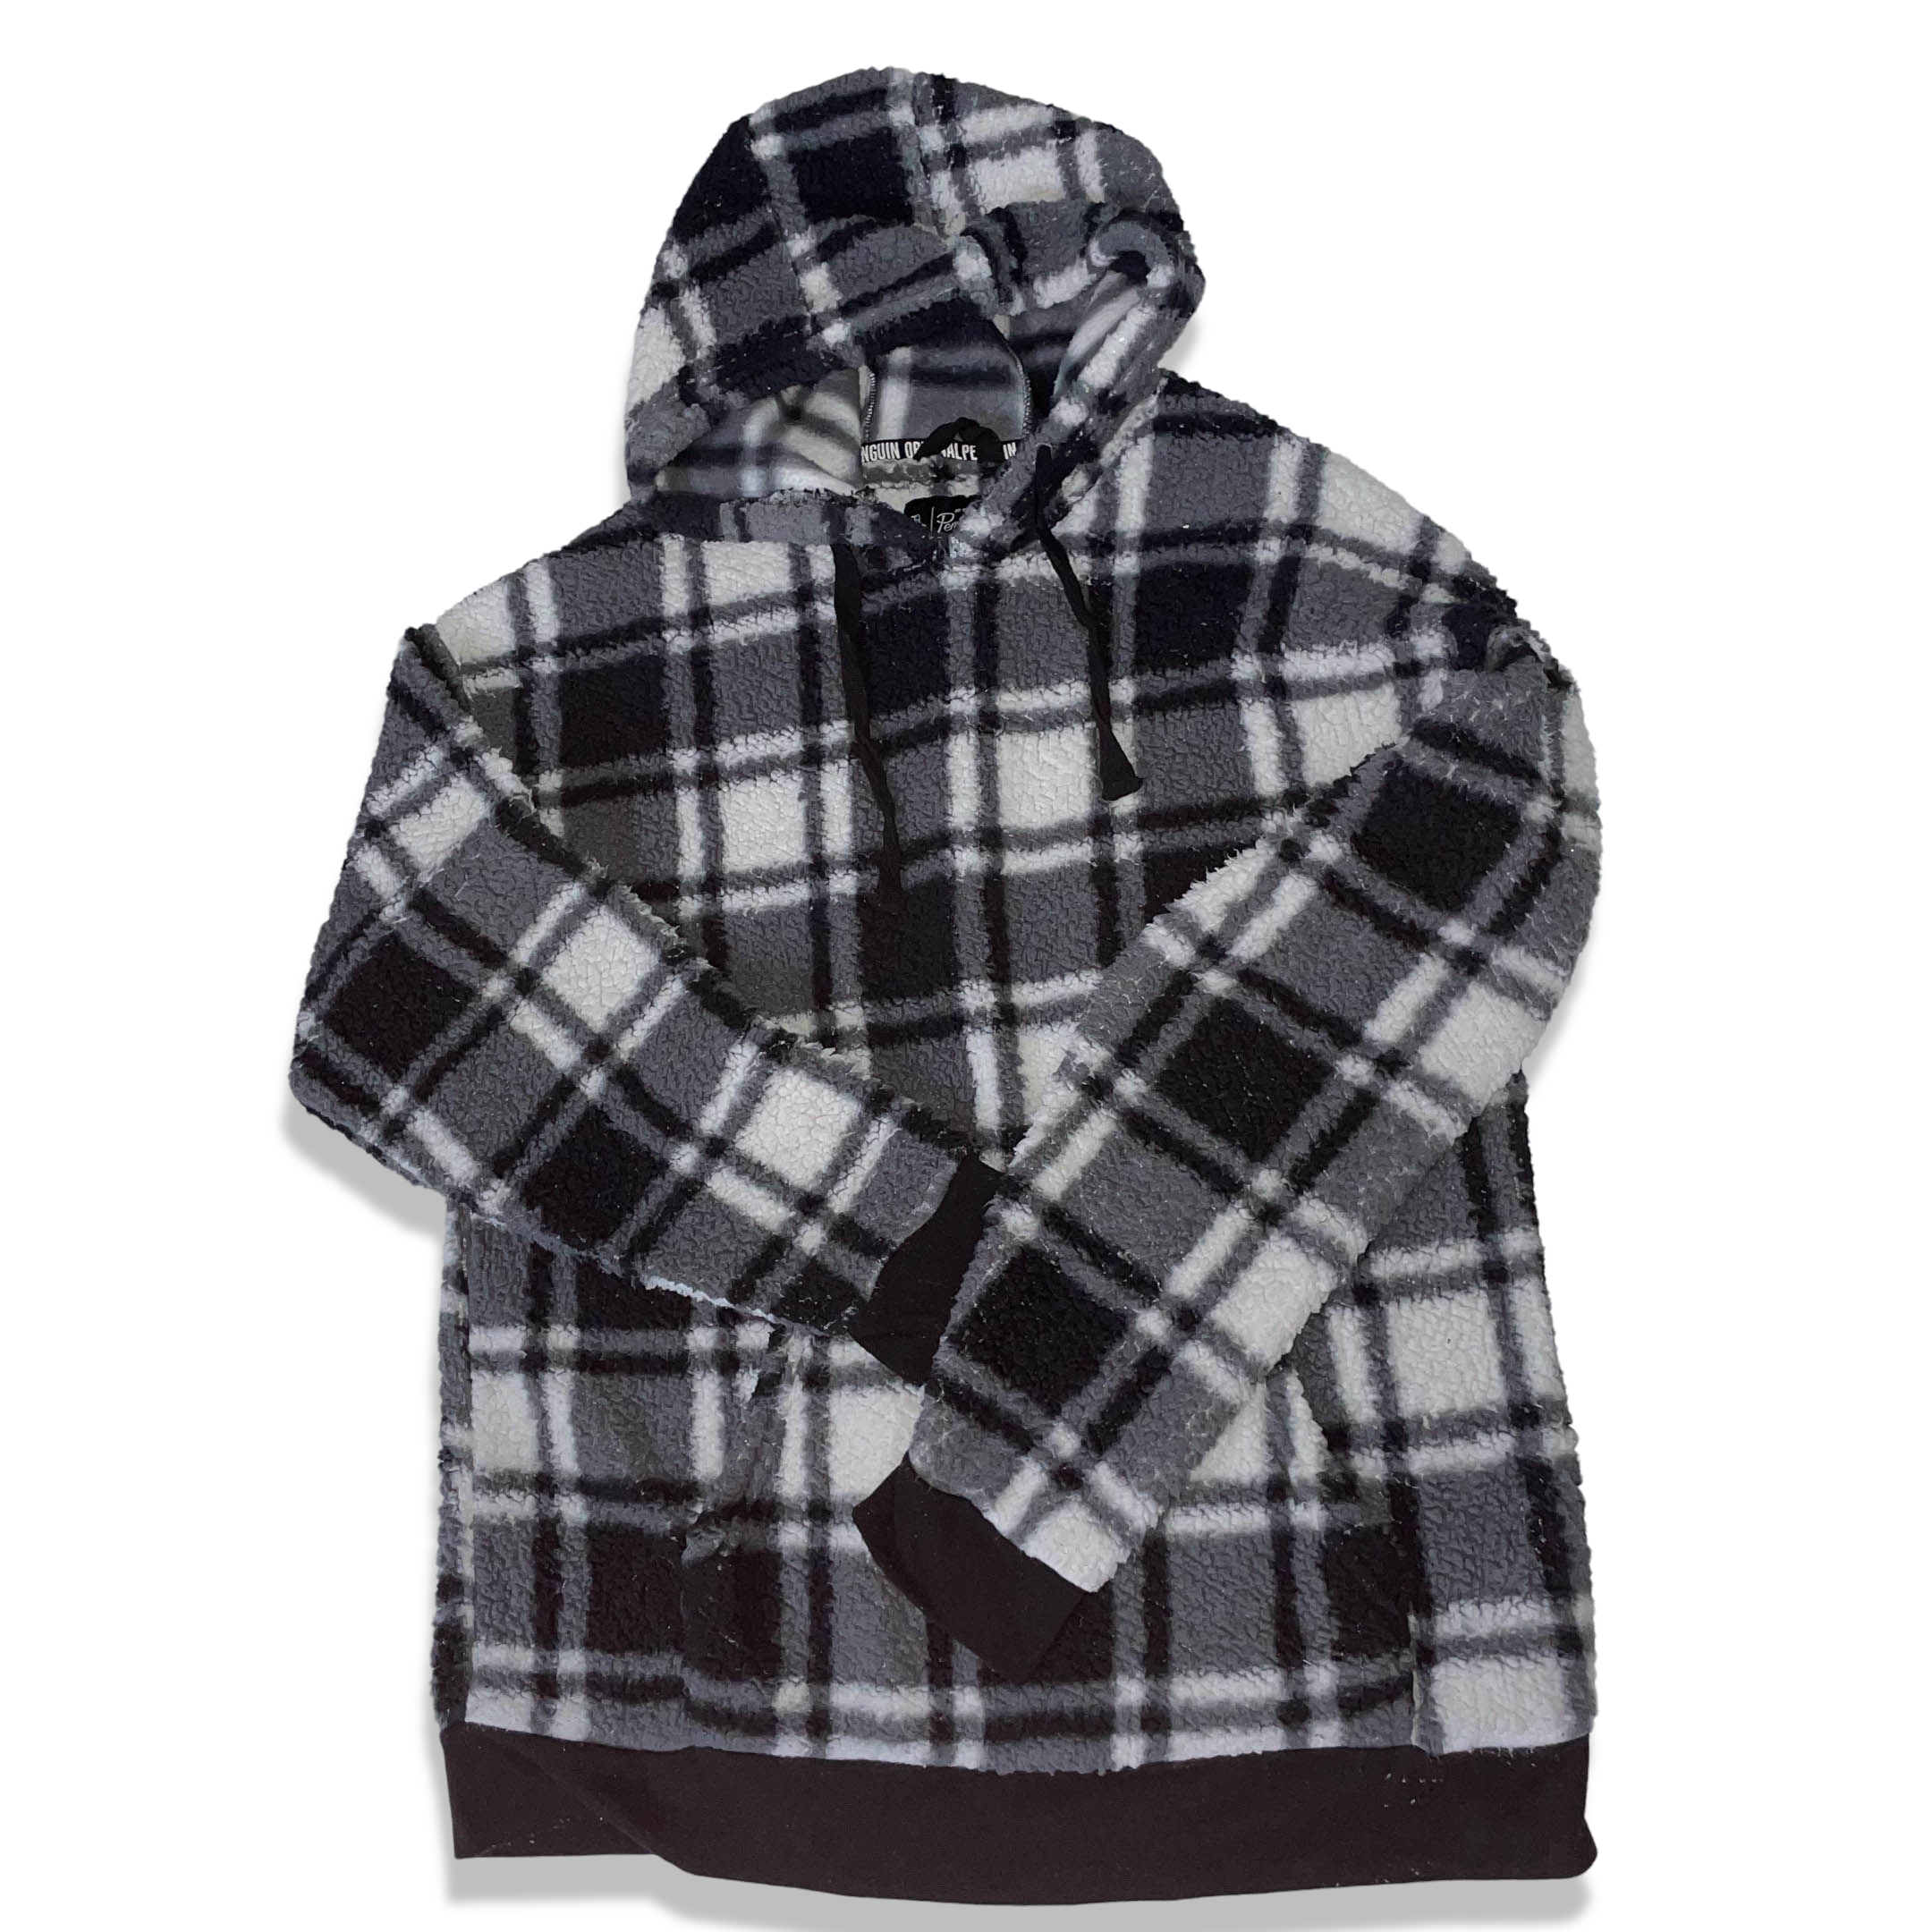 Men's Penguin Original large black & white plaid hooded sweatshirt | SKU 3687